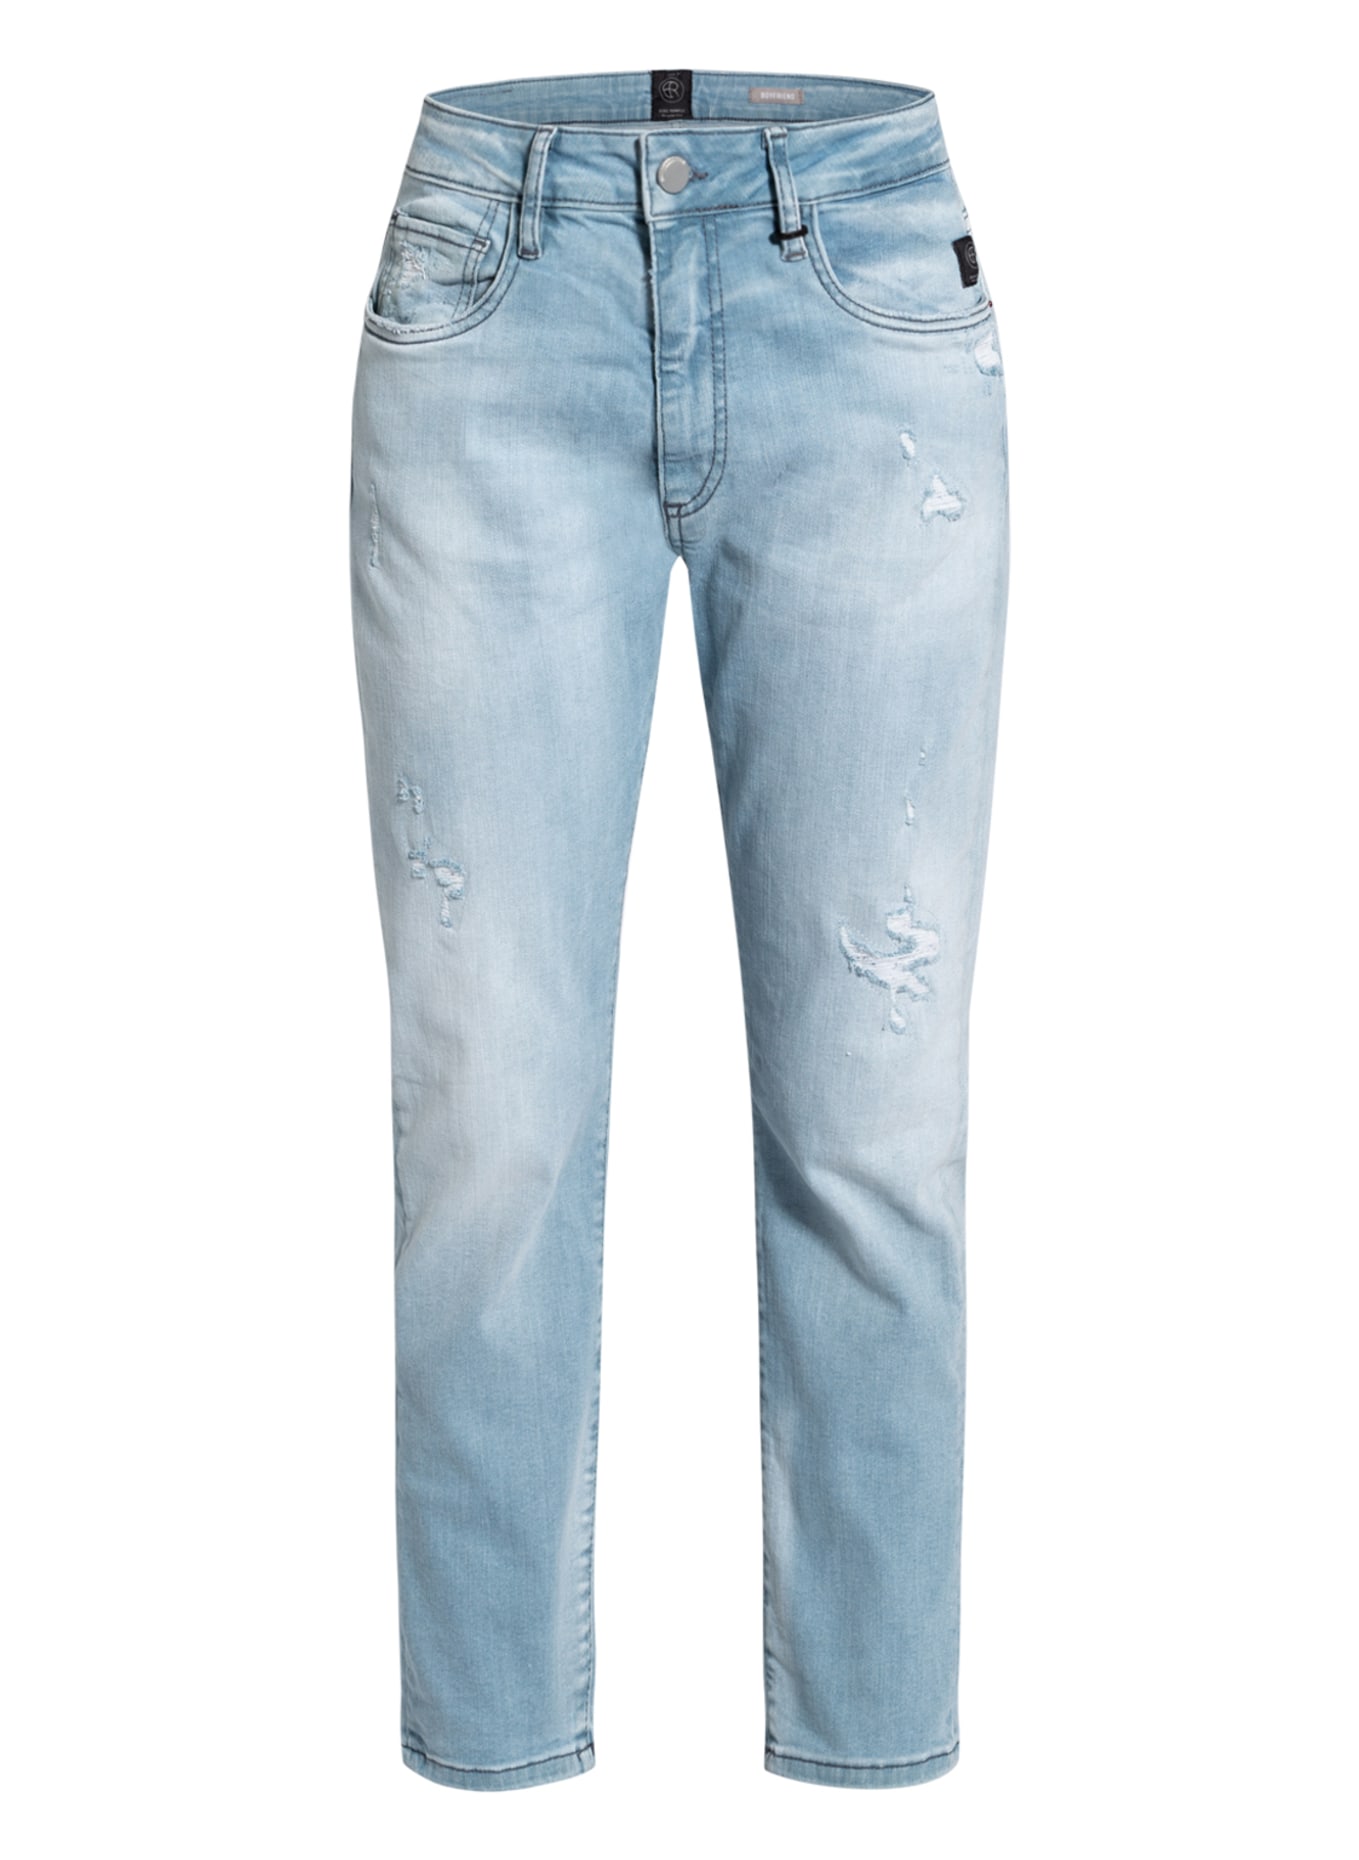 ELIAS RUMELIS 7/8-Jeans ERLEONA, Farbe: 631 washed out blue (Bild 1)